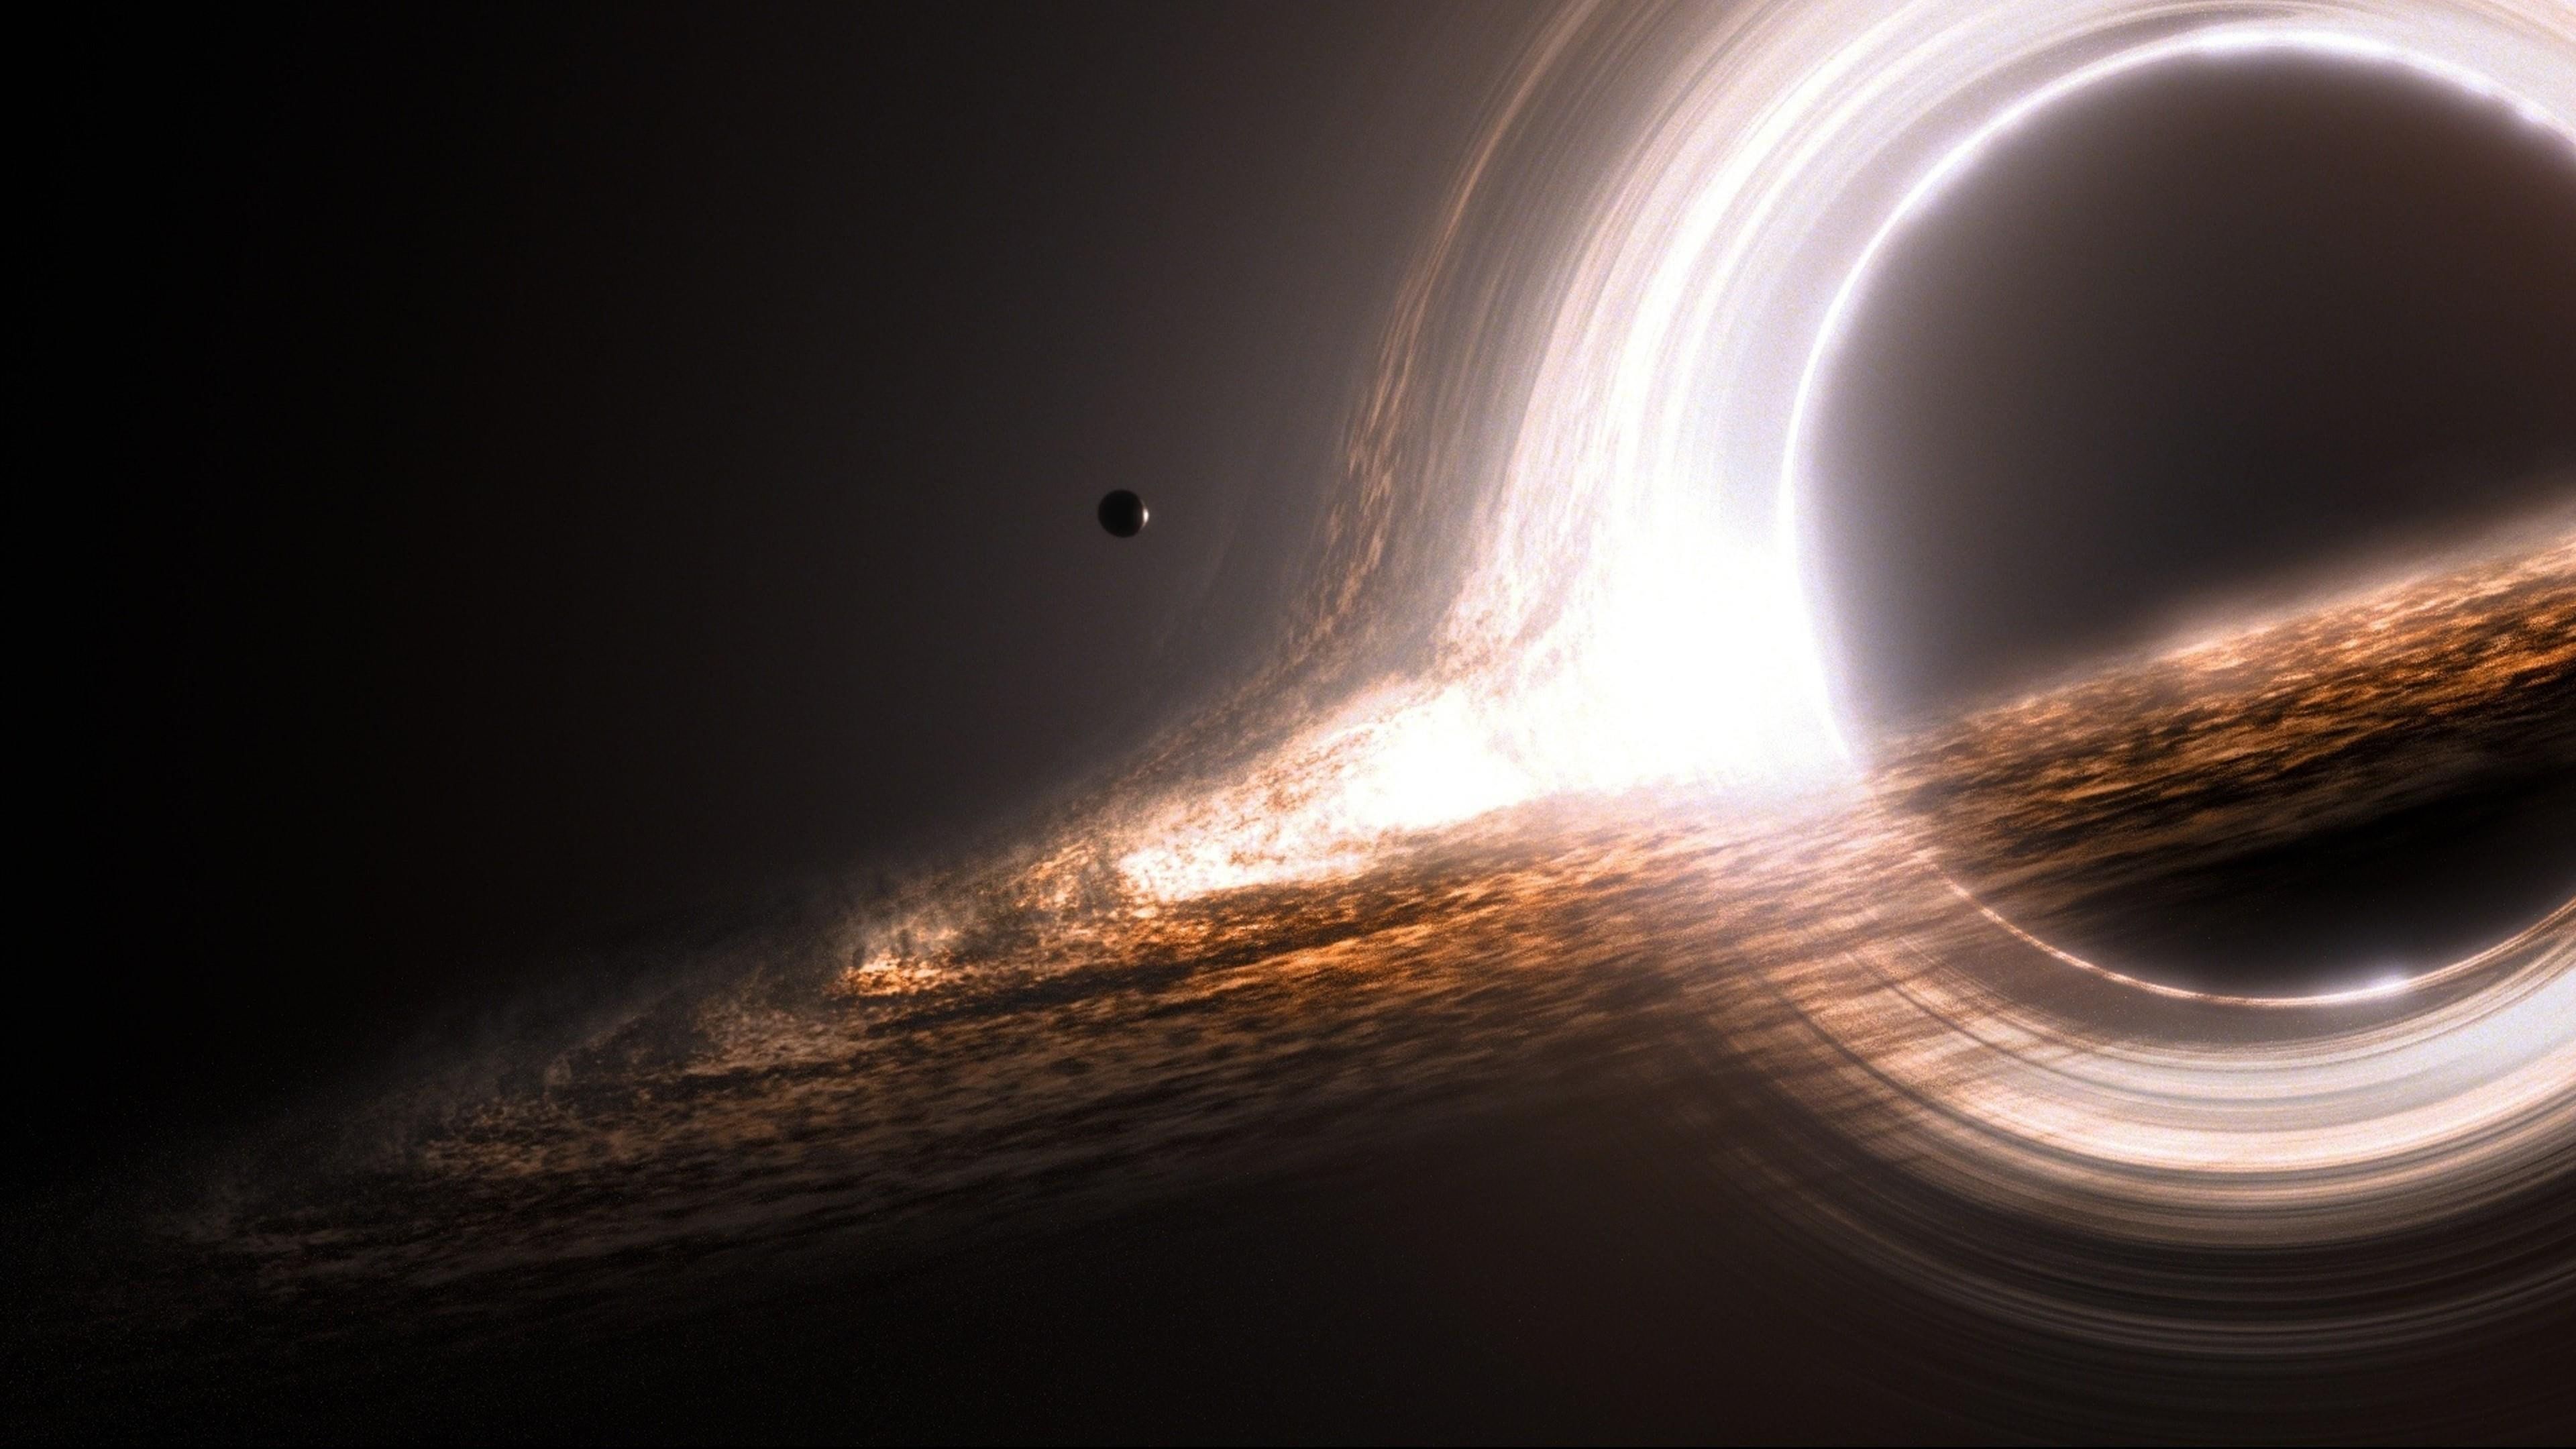 HD wallpaper: space, black hole, interstellar, planet 3840x2160px (4K). Black hole wallpaper, Black hole, Wallpaper space